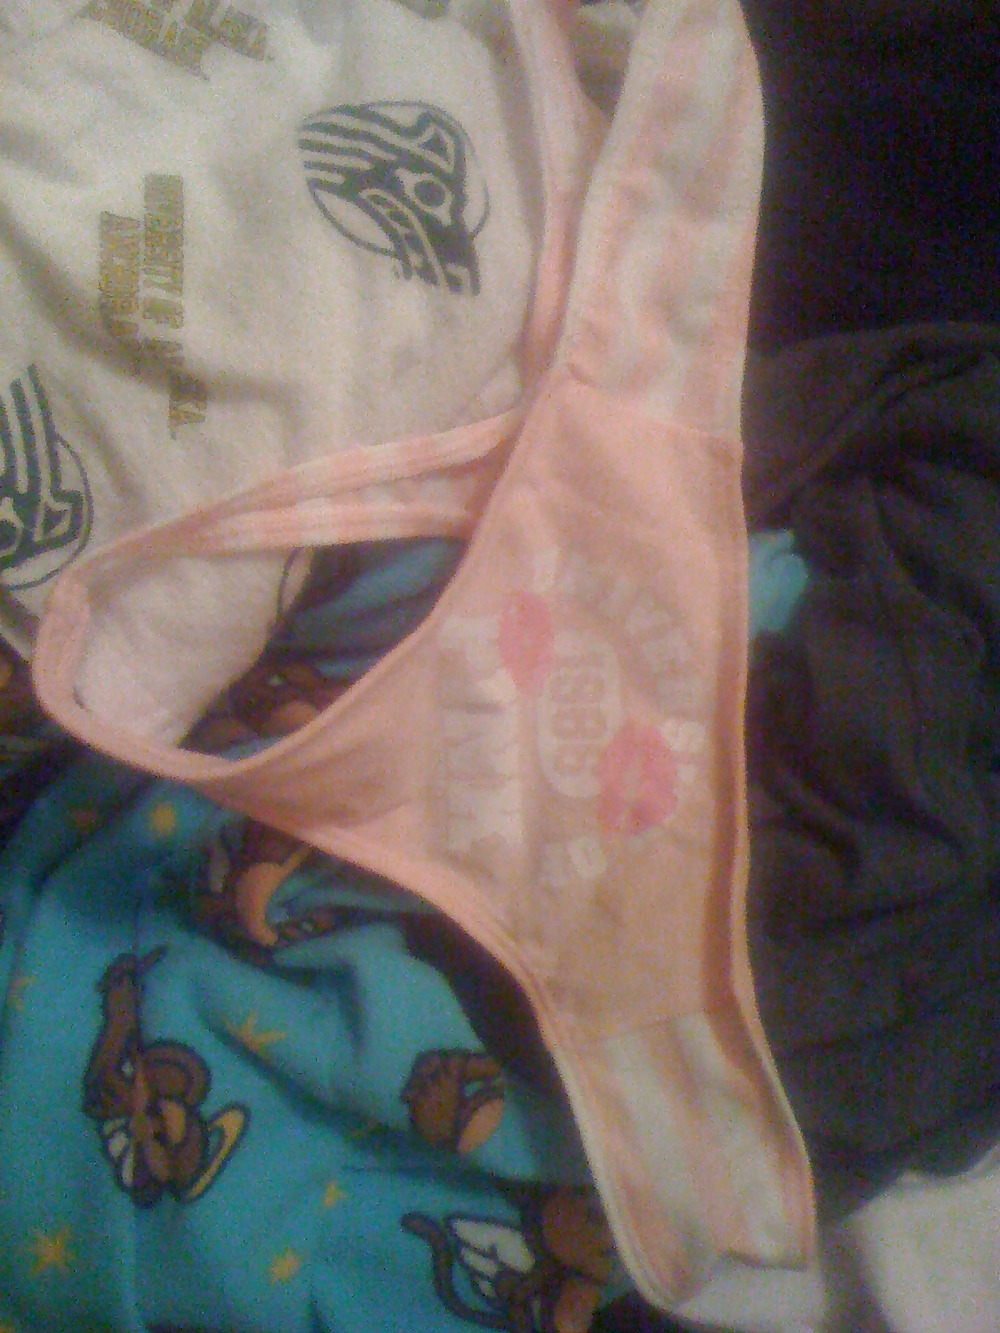 XXX Friend's girl's bras and panties